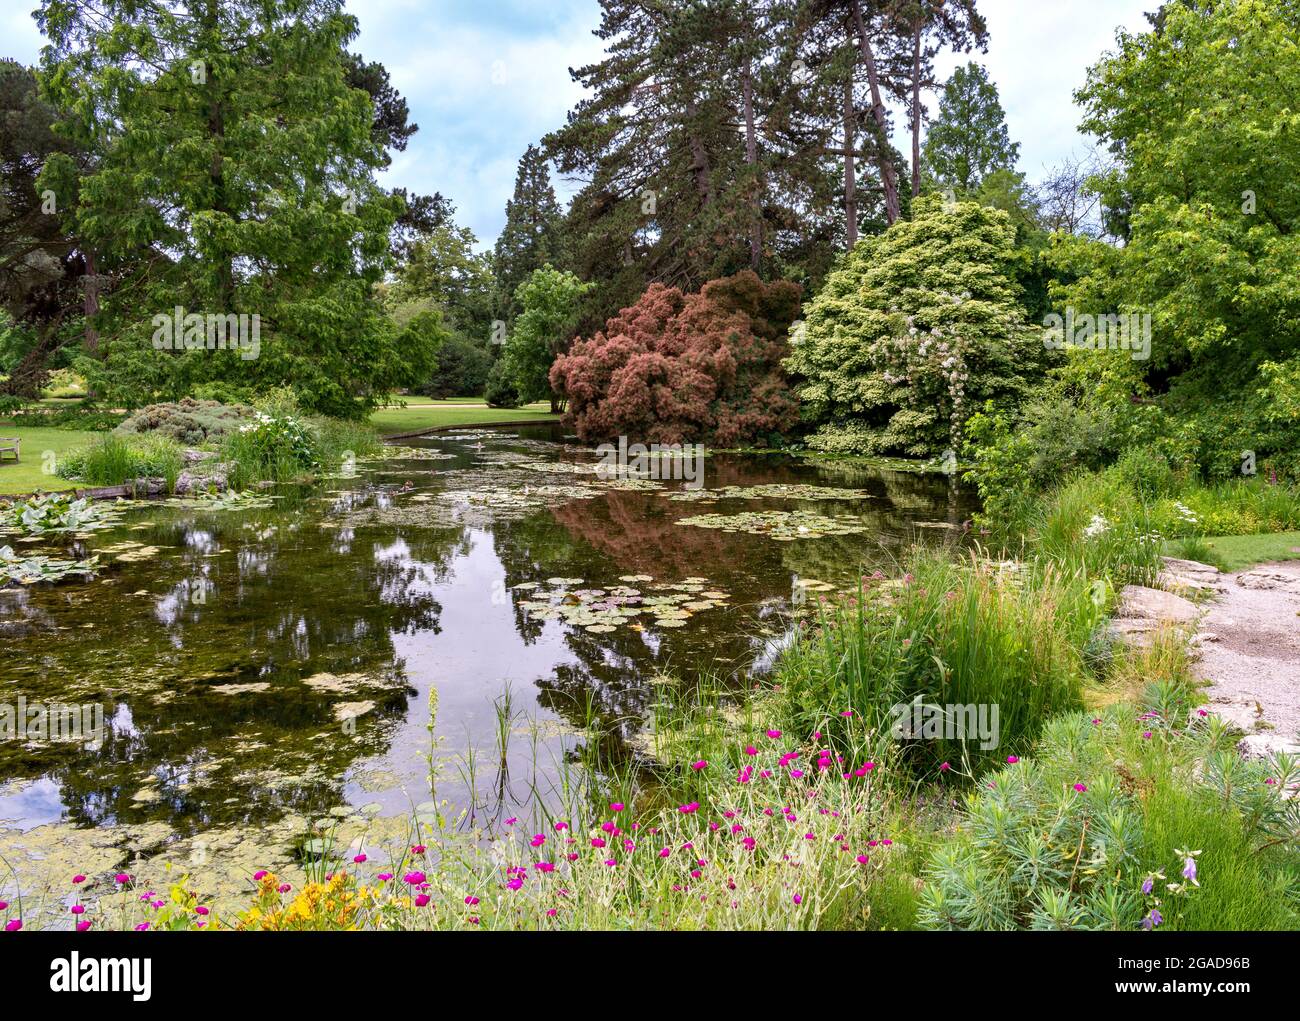 CAMBRIDGE ENGLAND UNIVERSITY BOTANIC GARDENS THE LAKE AND SURROUNDING TREES AND FLOWERS Stock Photo